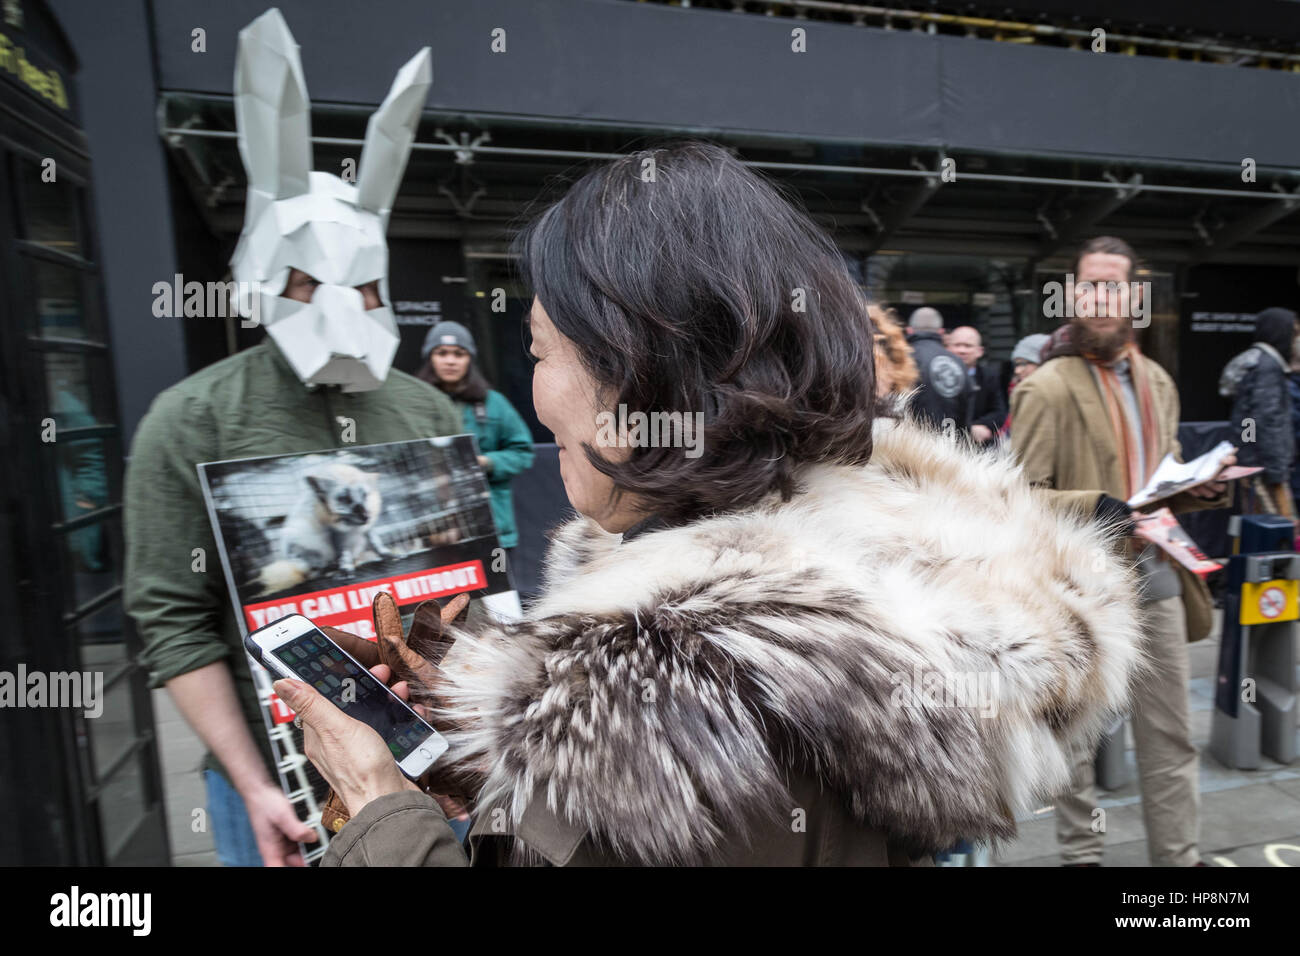 London, UK. 19th Feb, 2017. Anti-Fur protests during London Fashion Week Credit: Guy Corbishley/Alamy Live News Stock Photo